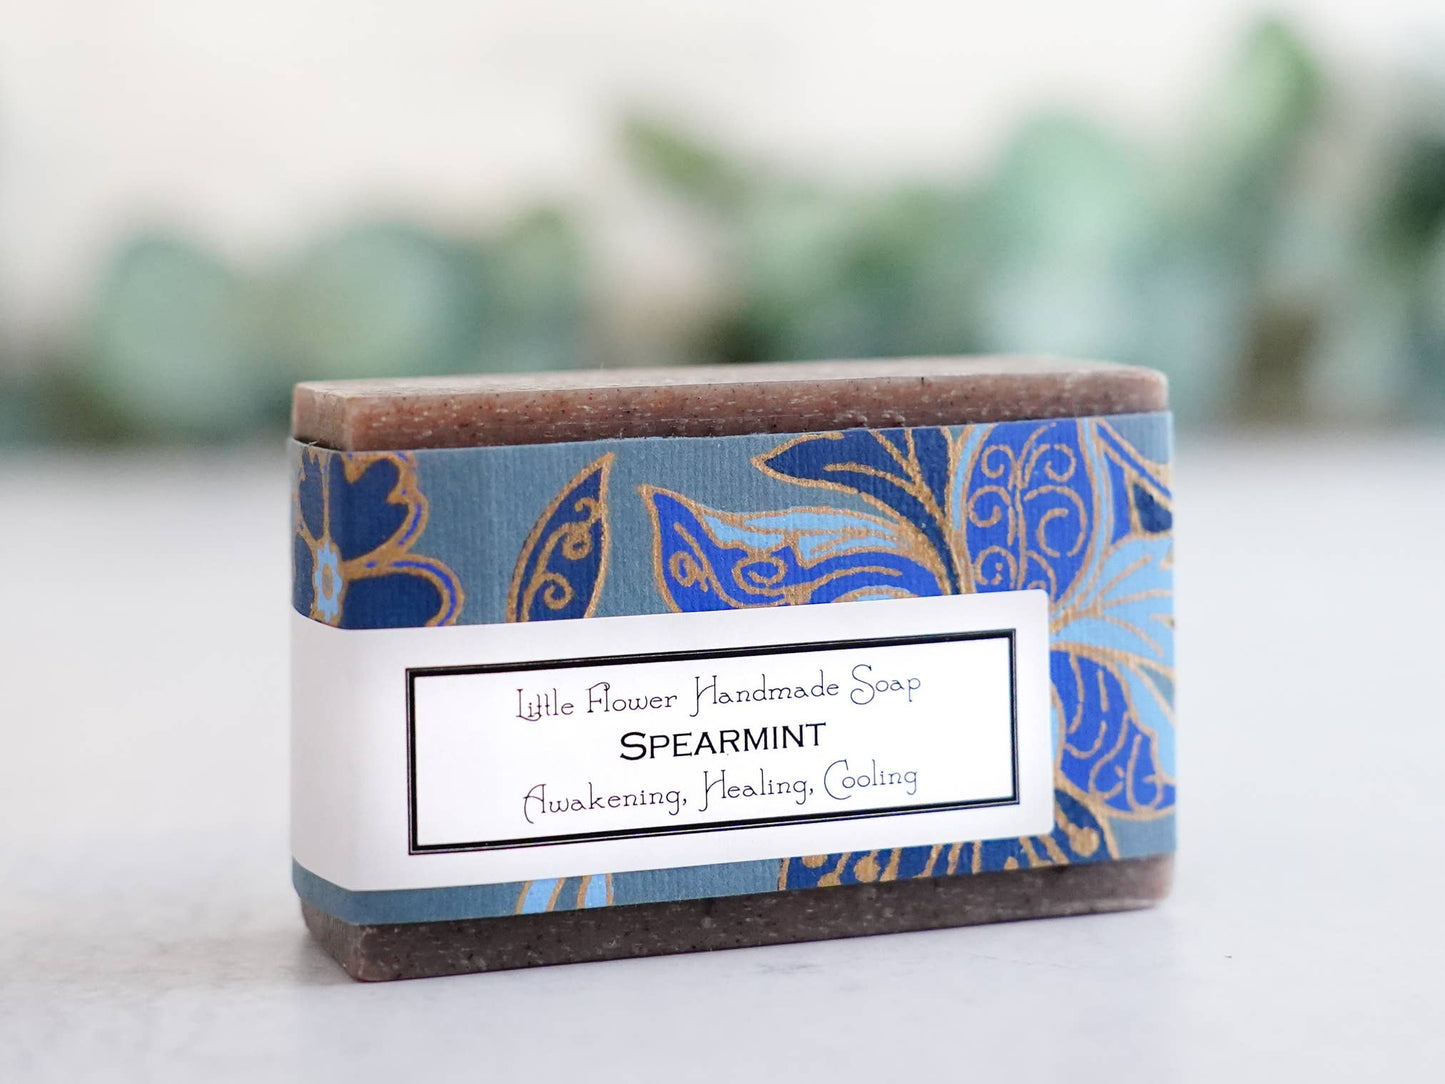 Spearmint Handmade Soap: 3.5 oz